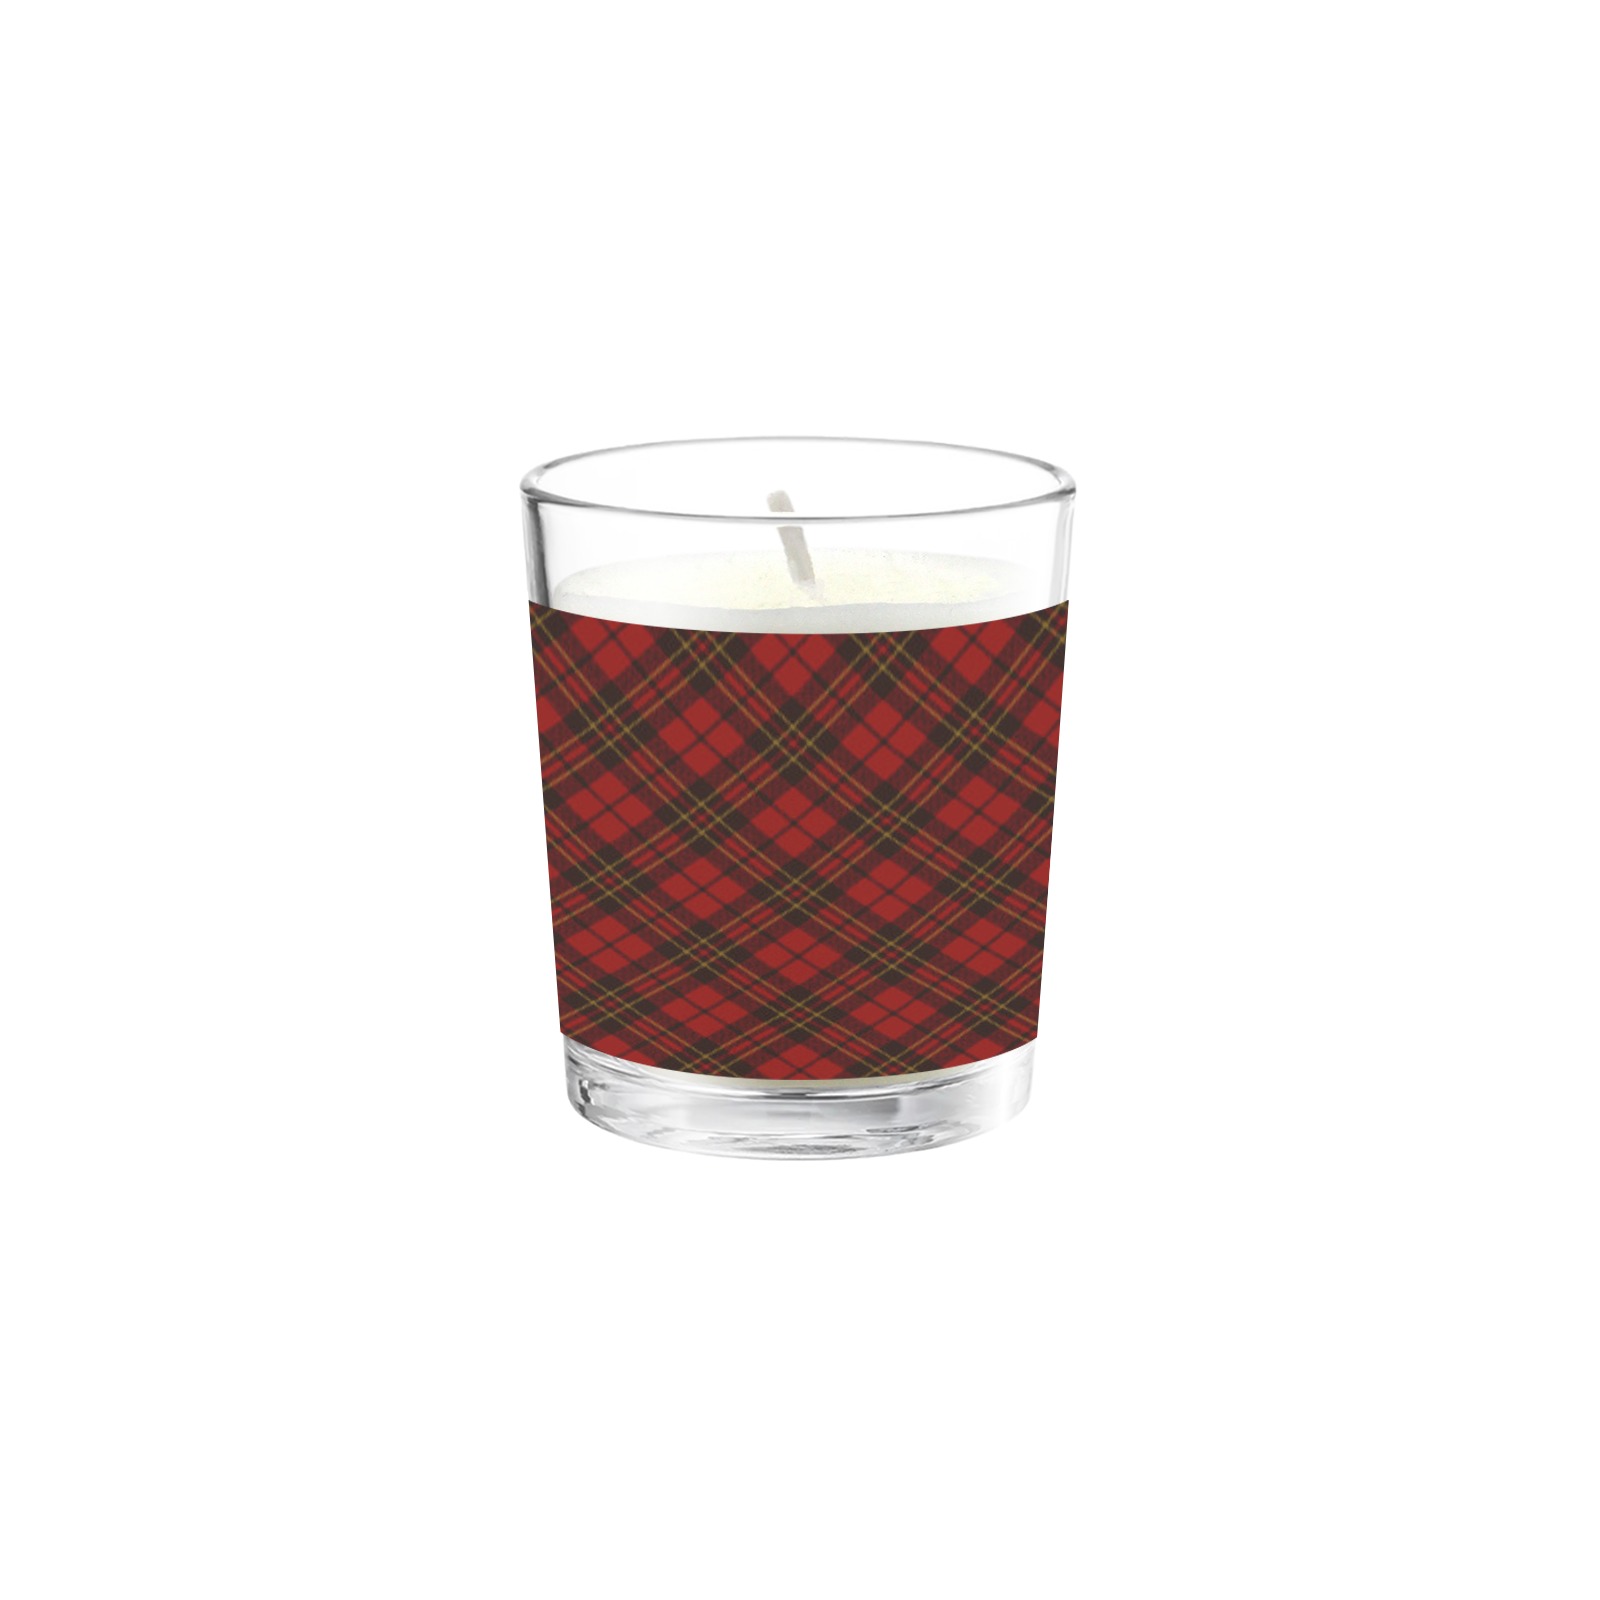 Red tartan plaid winter Christmas pattern holidays Transparent Candle Cup (Jasmine)